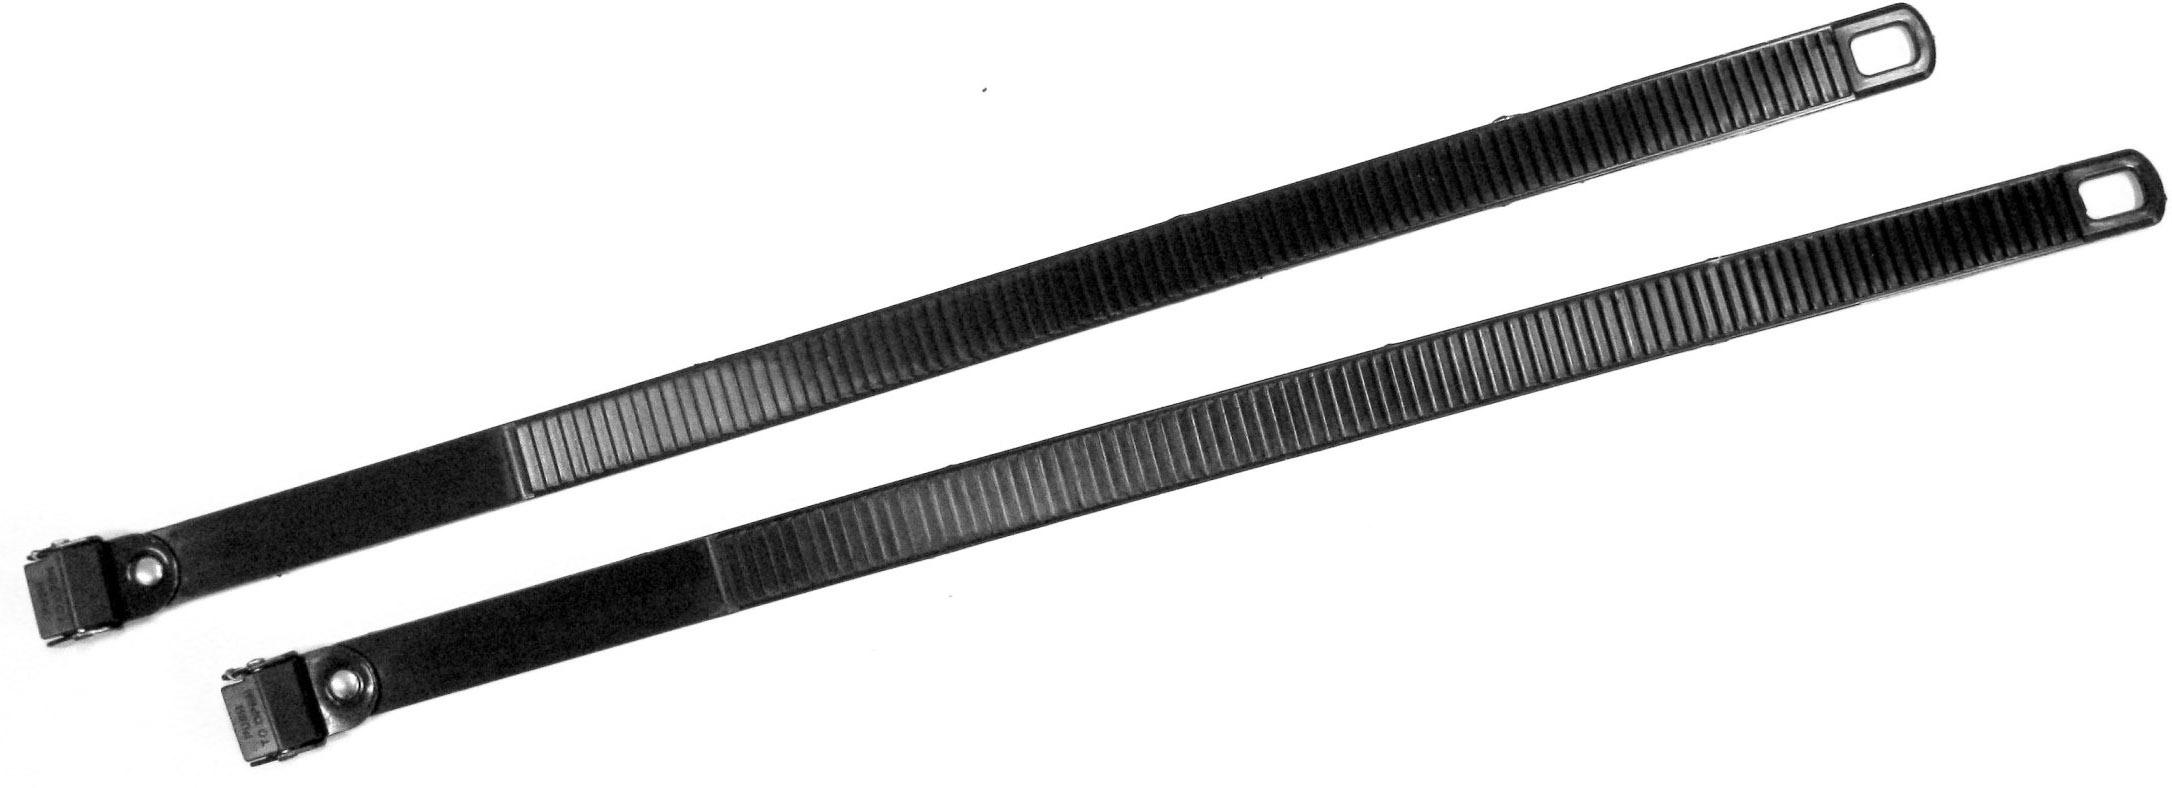 Peruzo Wheel Holder Strap Extensions - Black